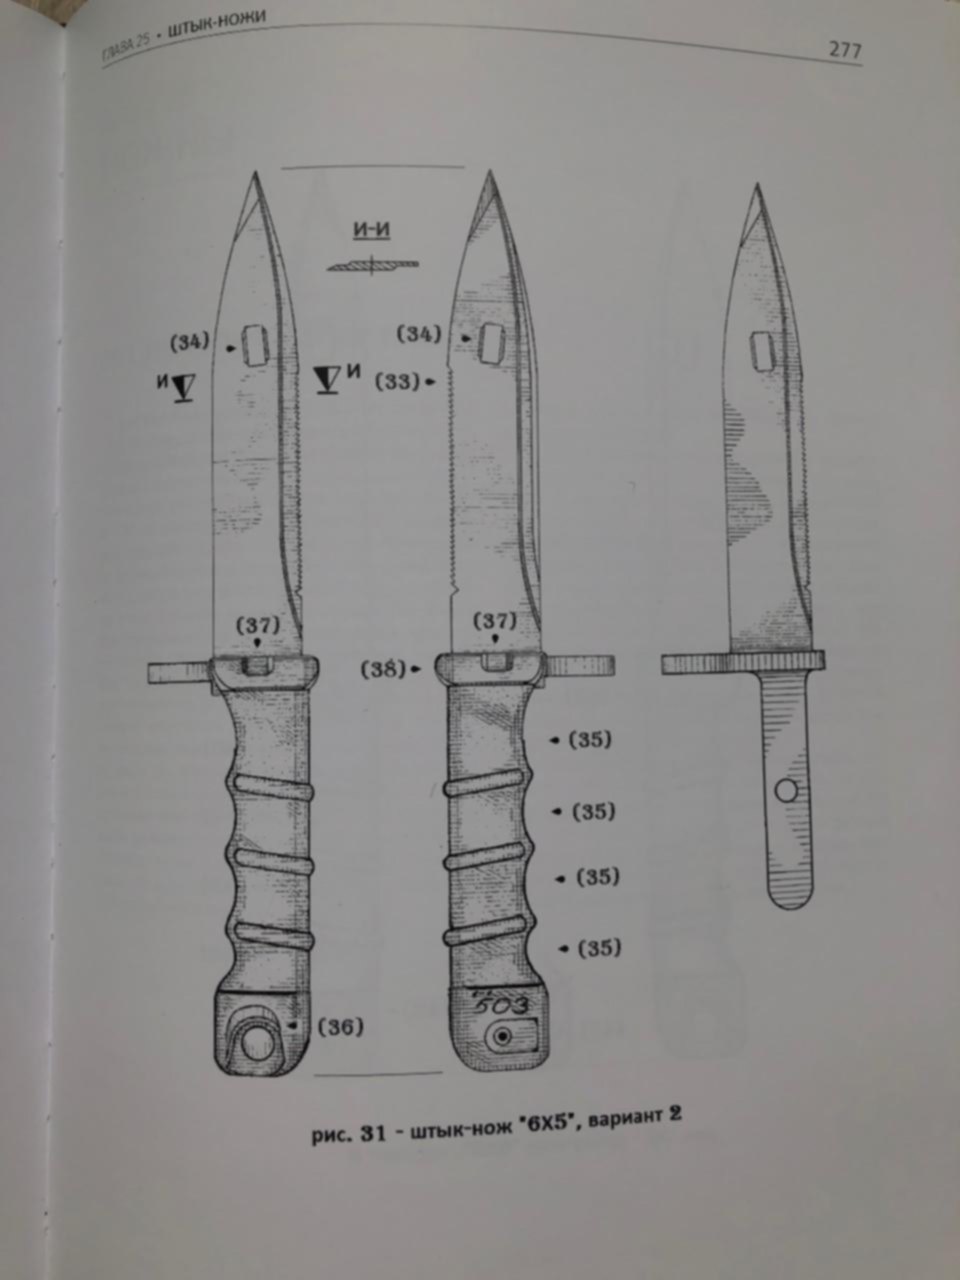 ТТХ штык ножа